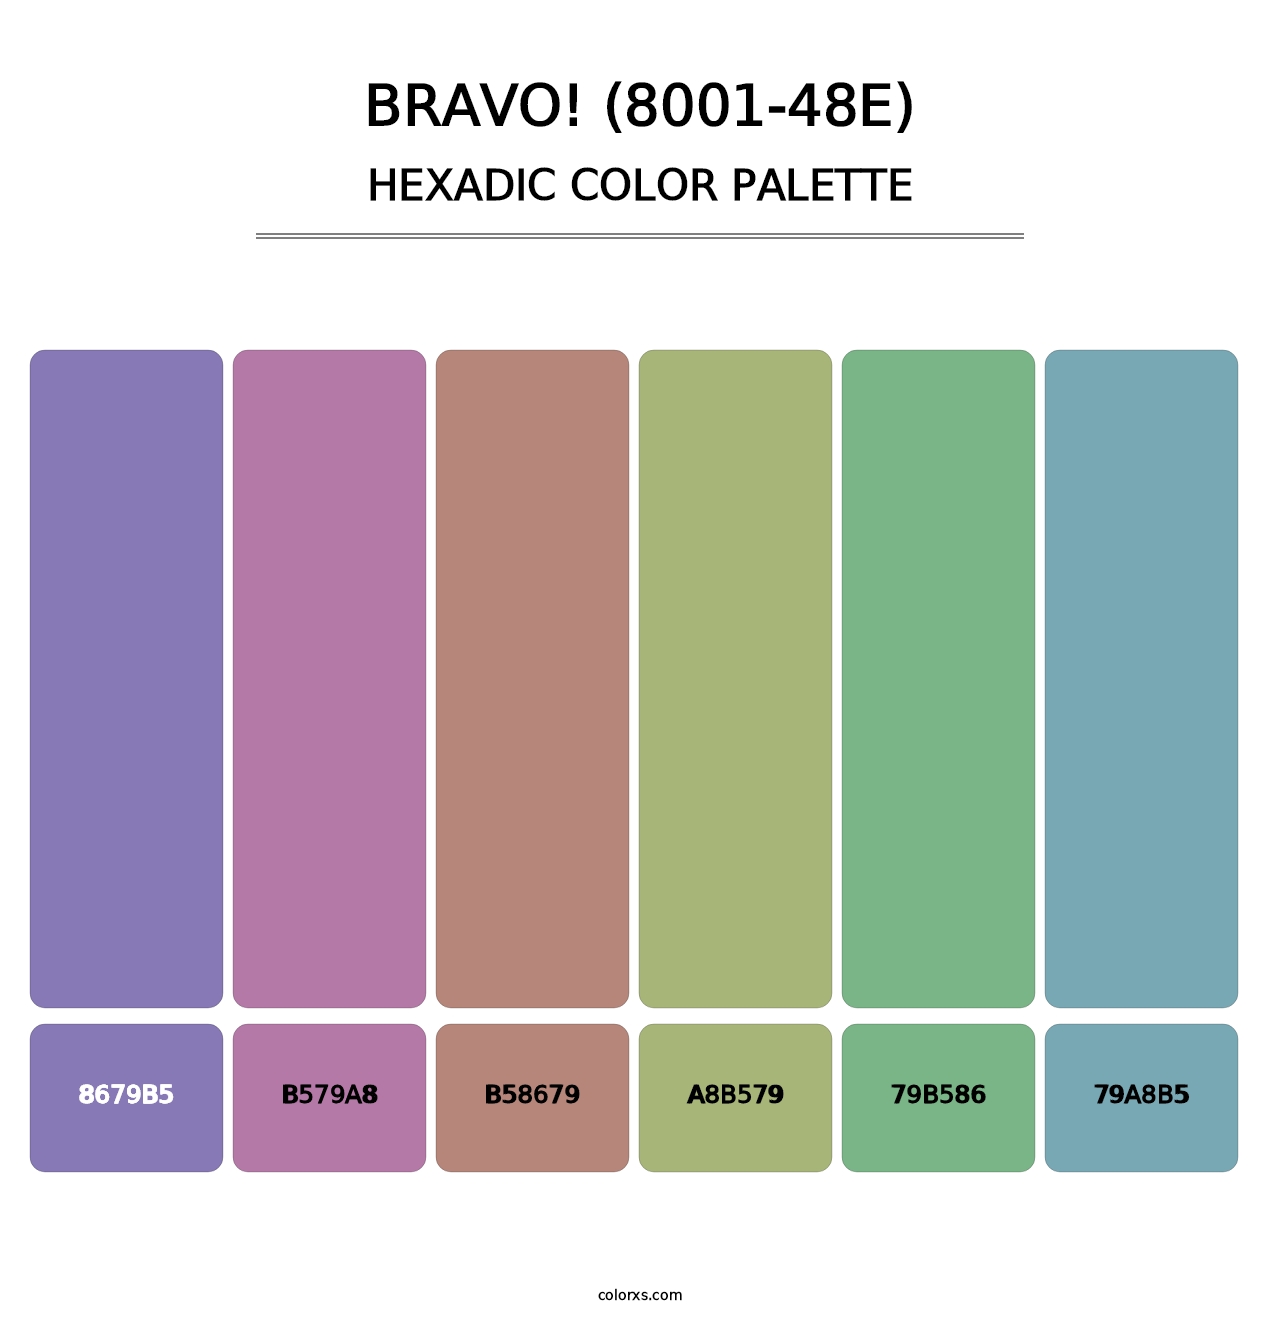 Bravo! (8001-48E) - Hexadic Color Palette